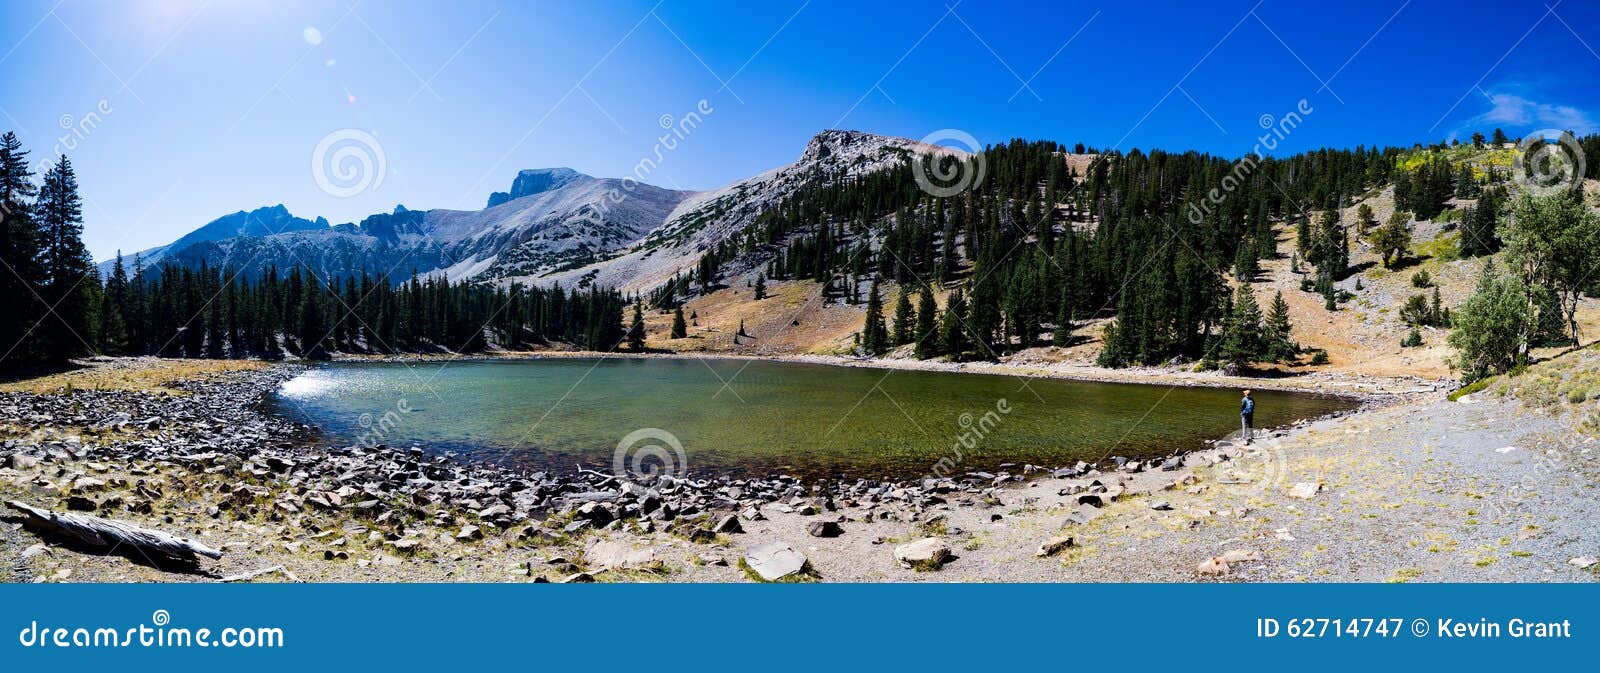 stella lake panorama in great basin national park